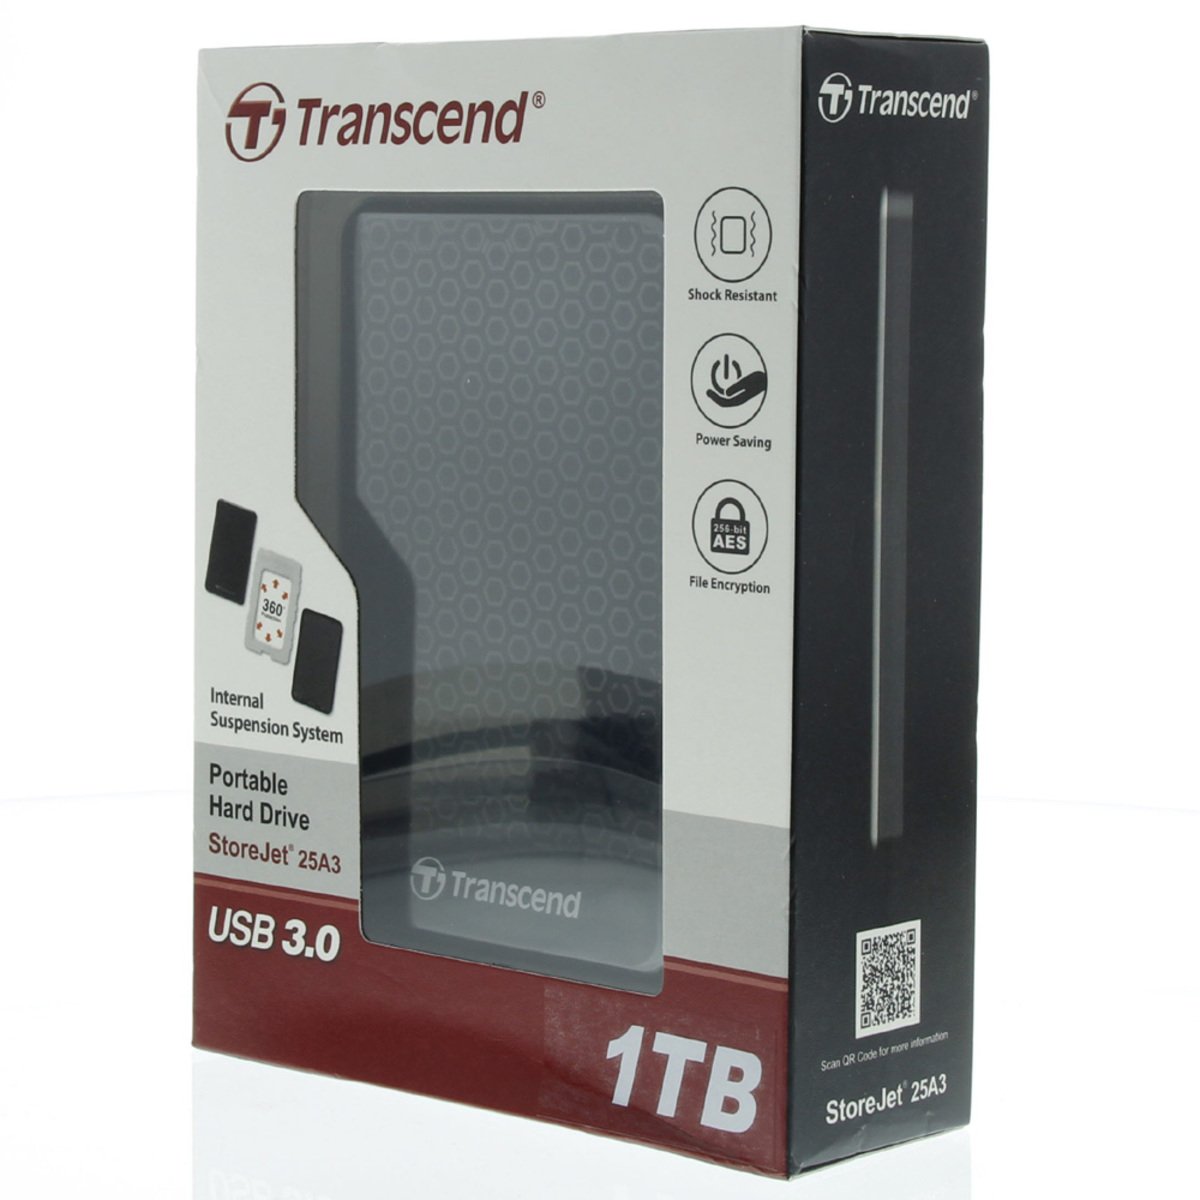 Transcend External HDD 1TSJ25A3 1TB 3.0